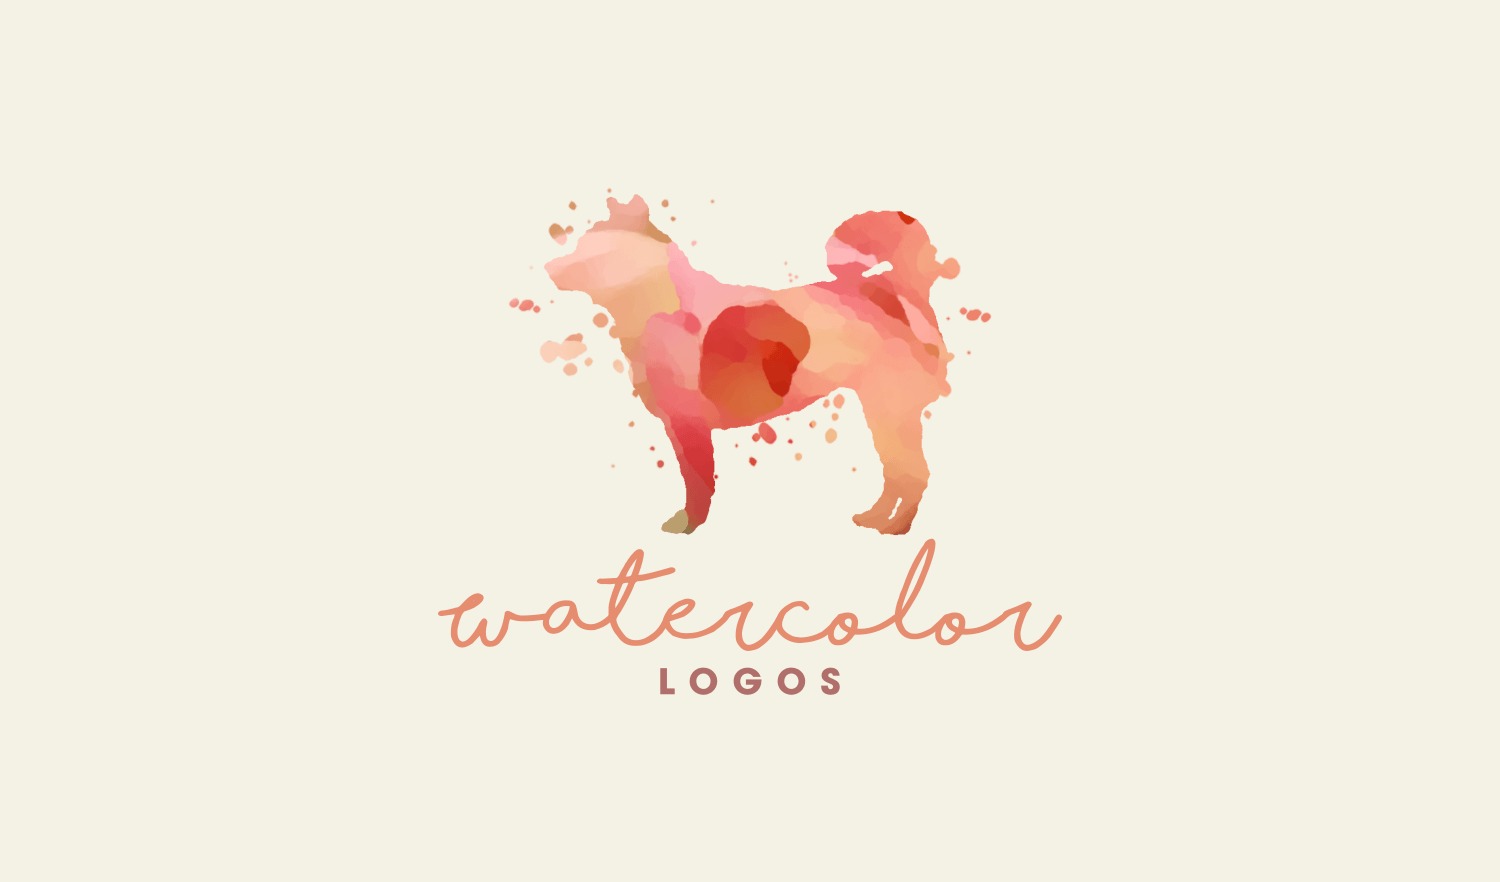 water-colour-logo